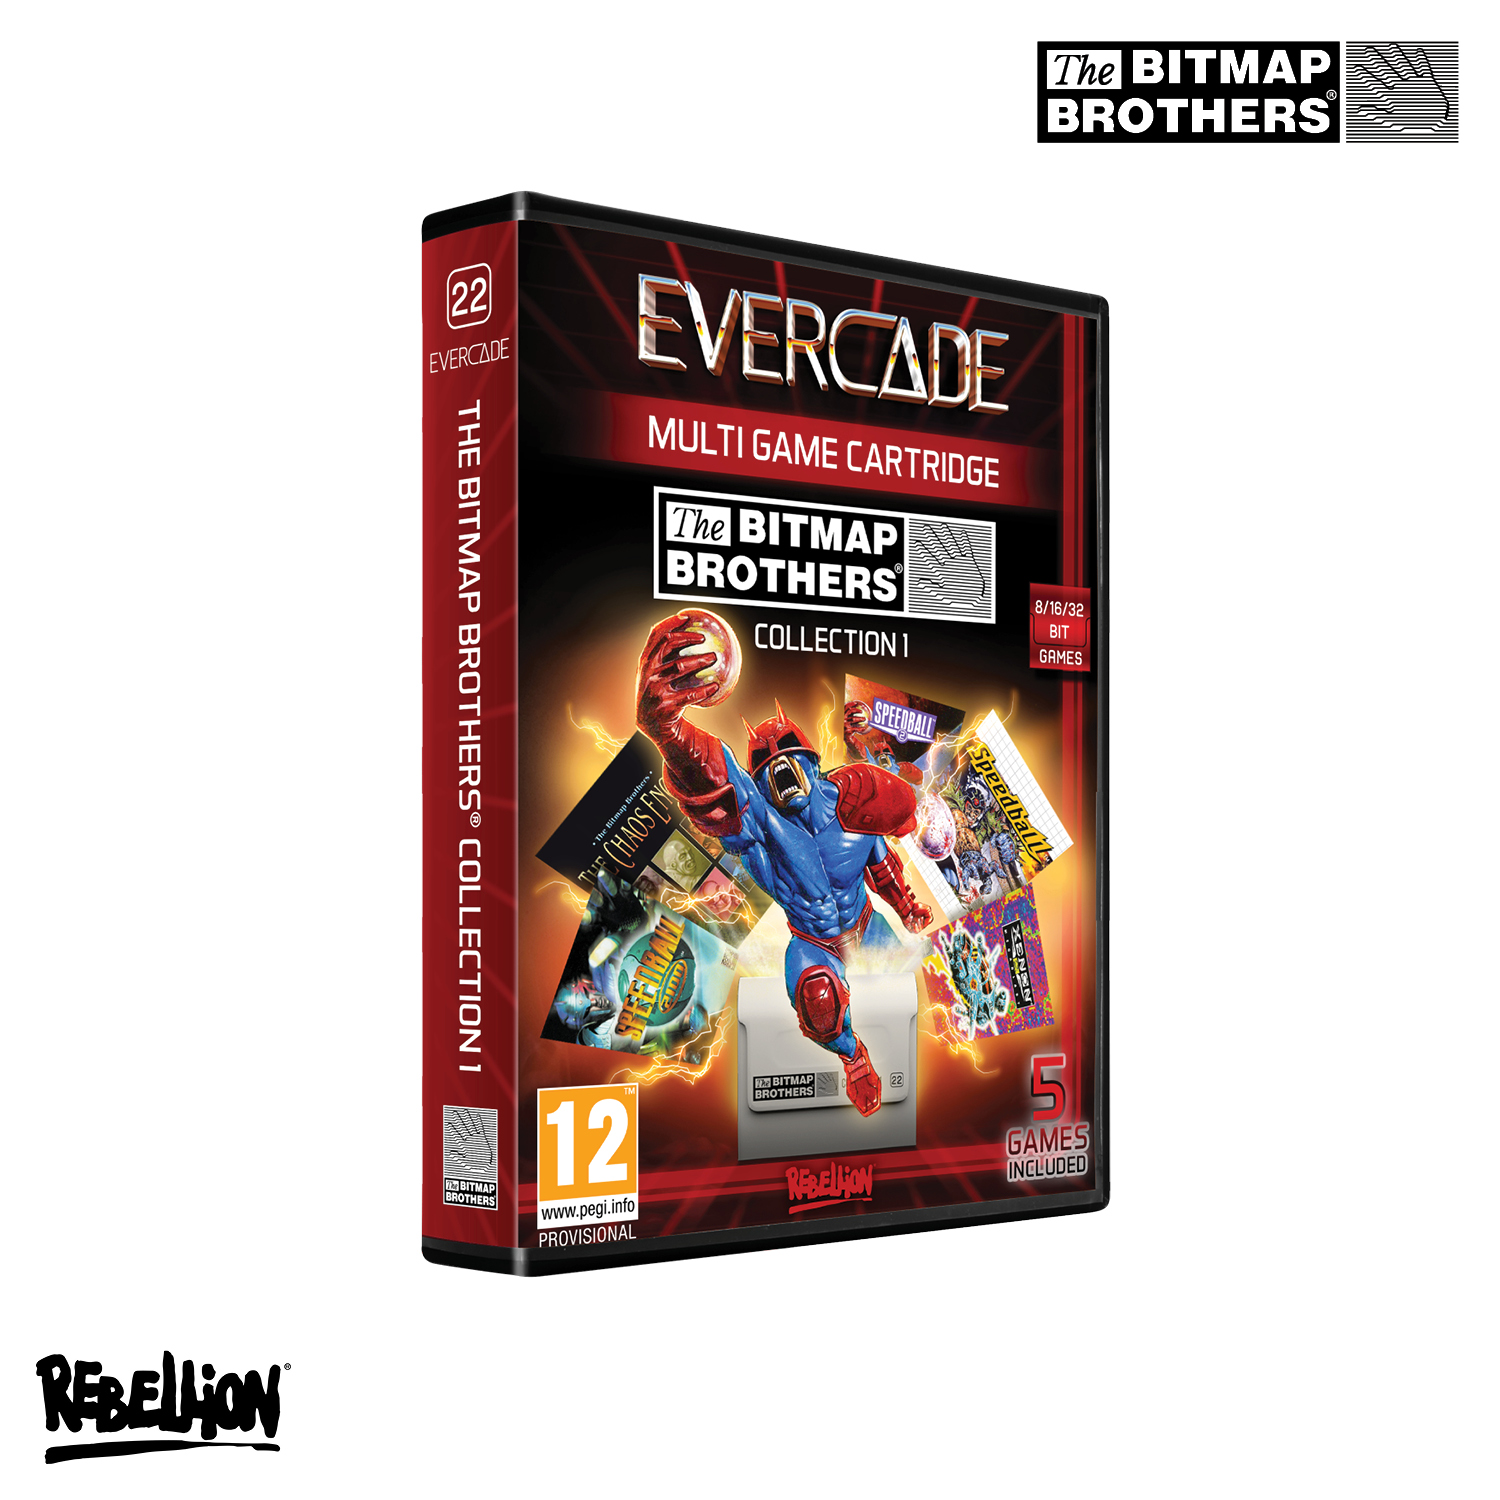 Evercade - Bitmap Brothers cartridge 1 - 5 games